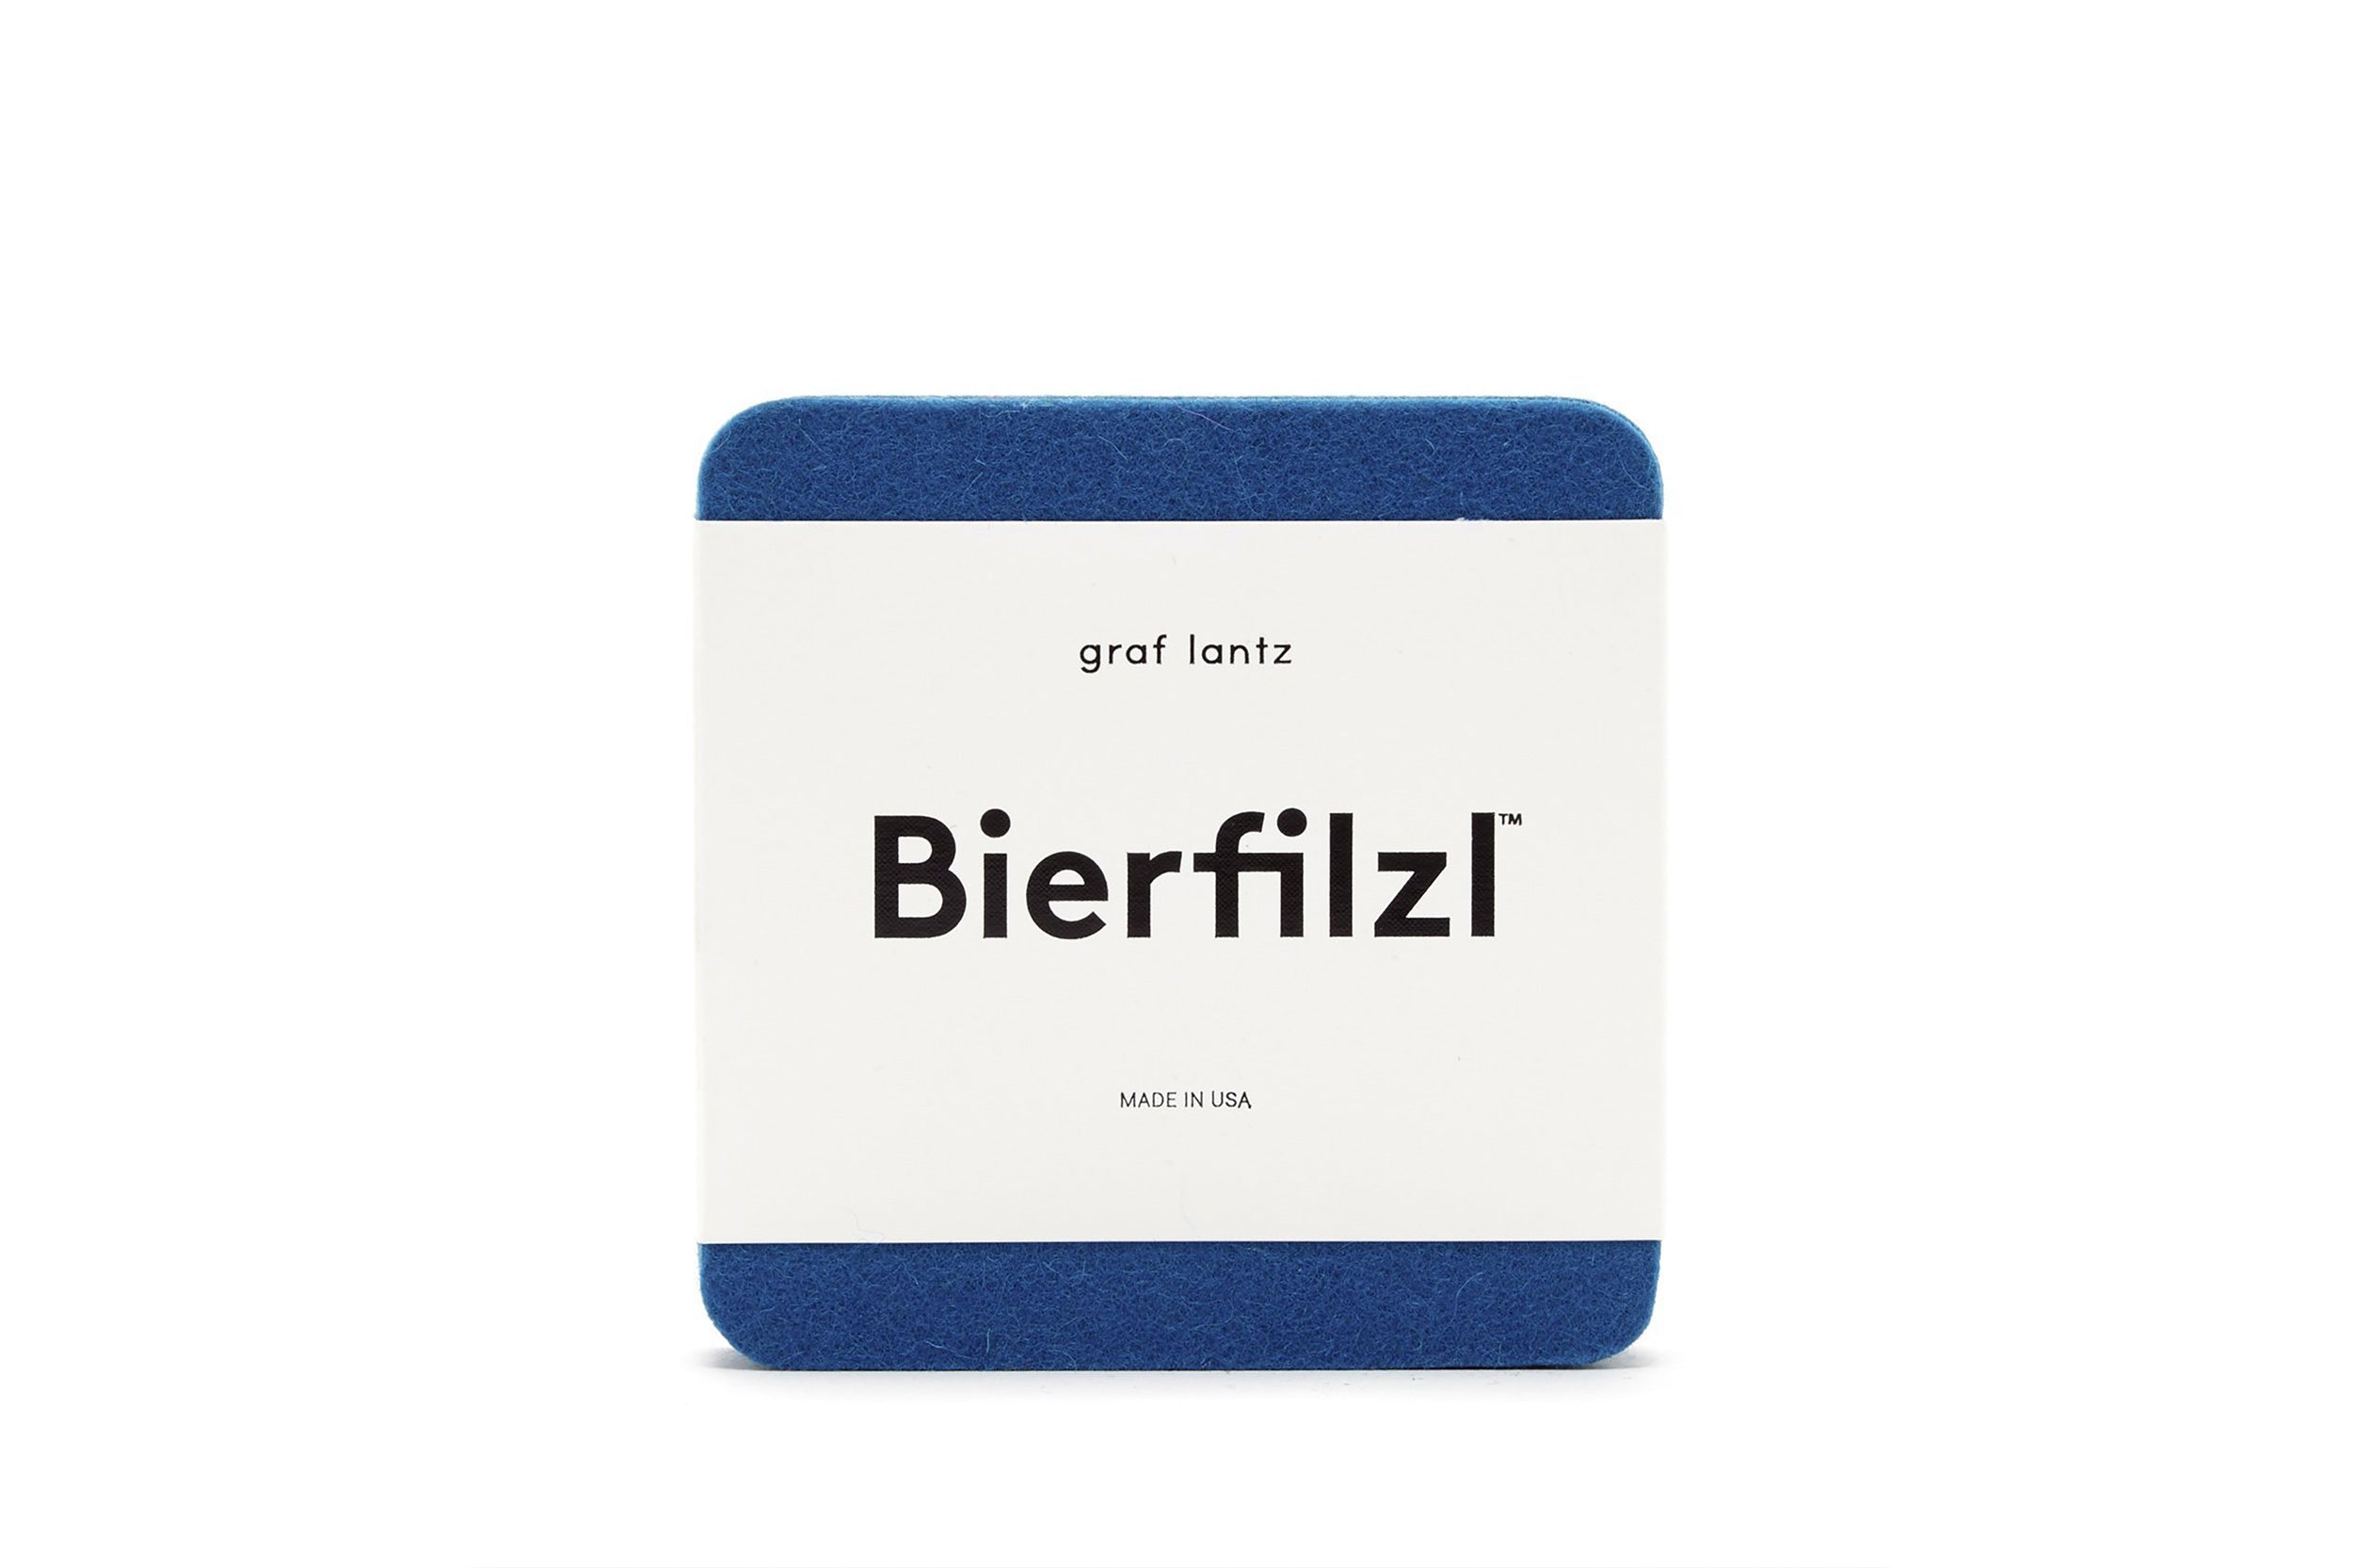 Graf Lantz-Bierfilz Coasters // Square